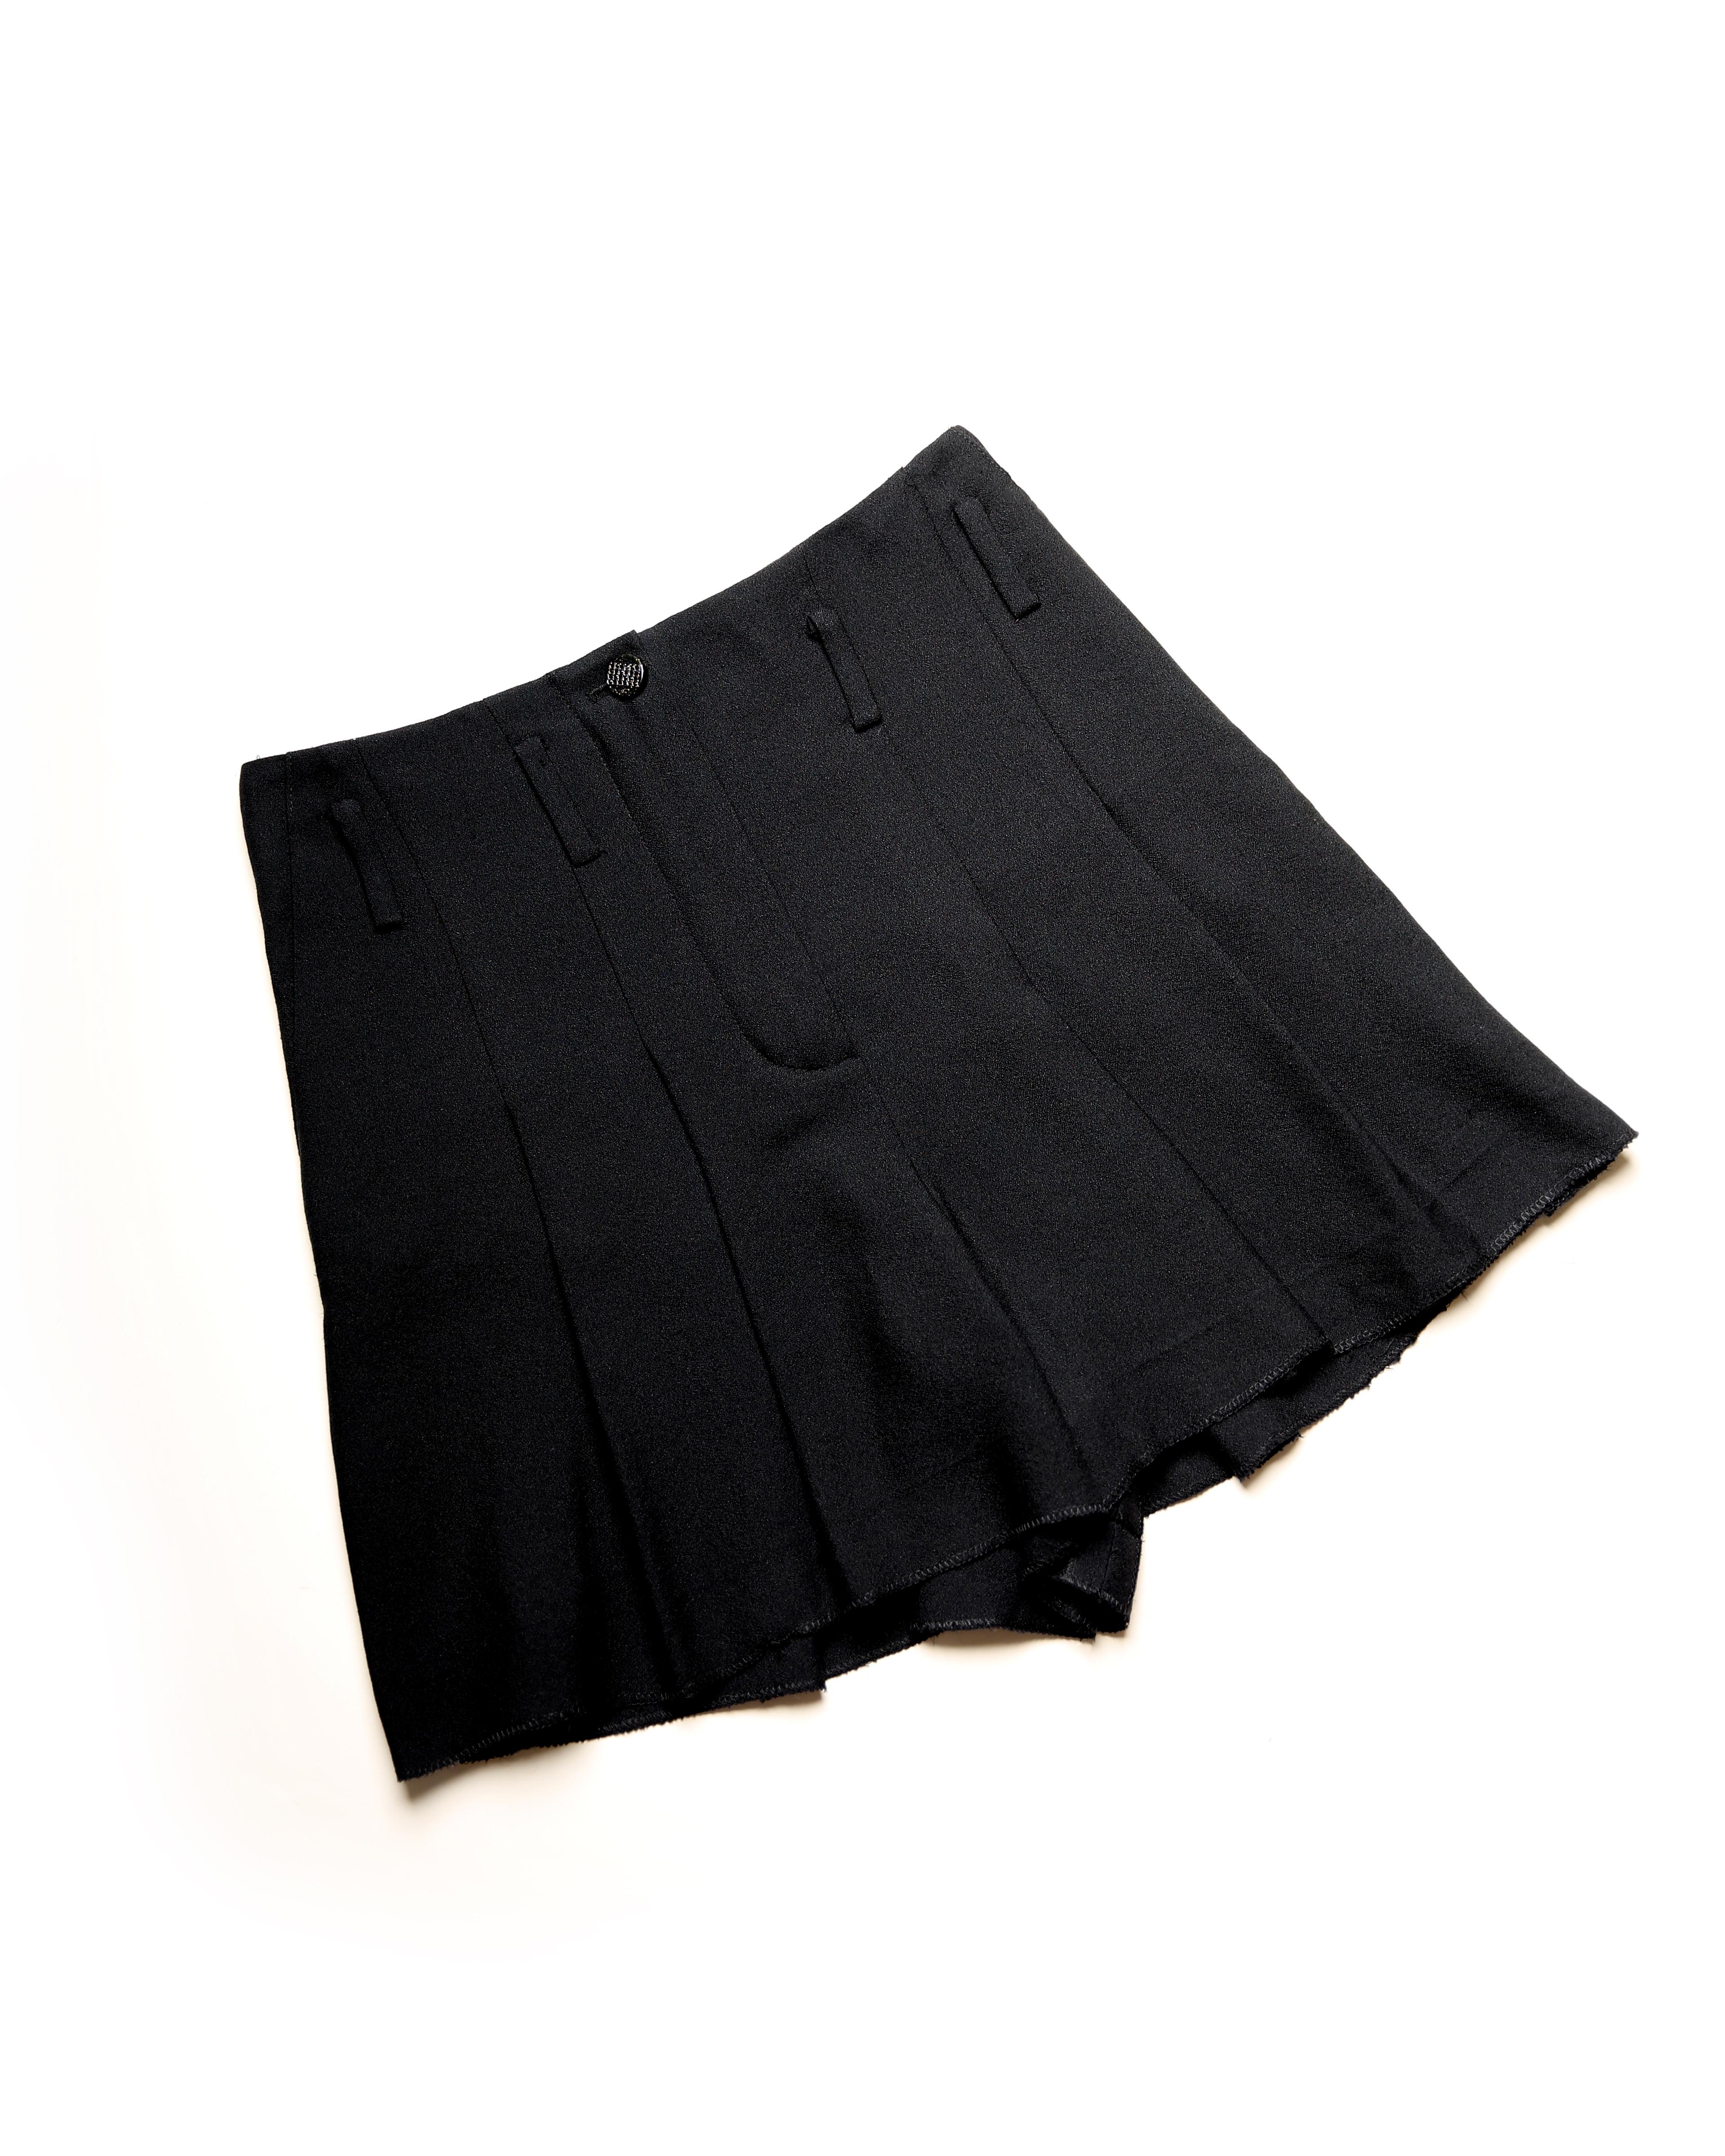 Women's Chanel vintage black high waisted pleated mini skirt shorts dress skort 34